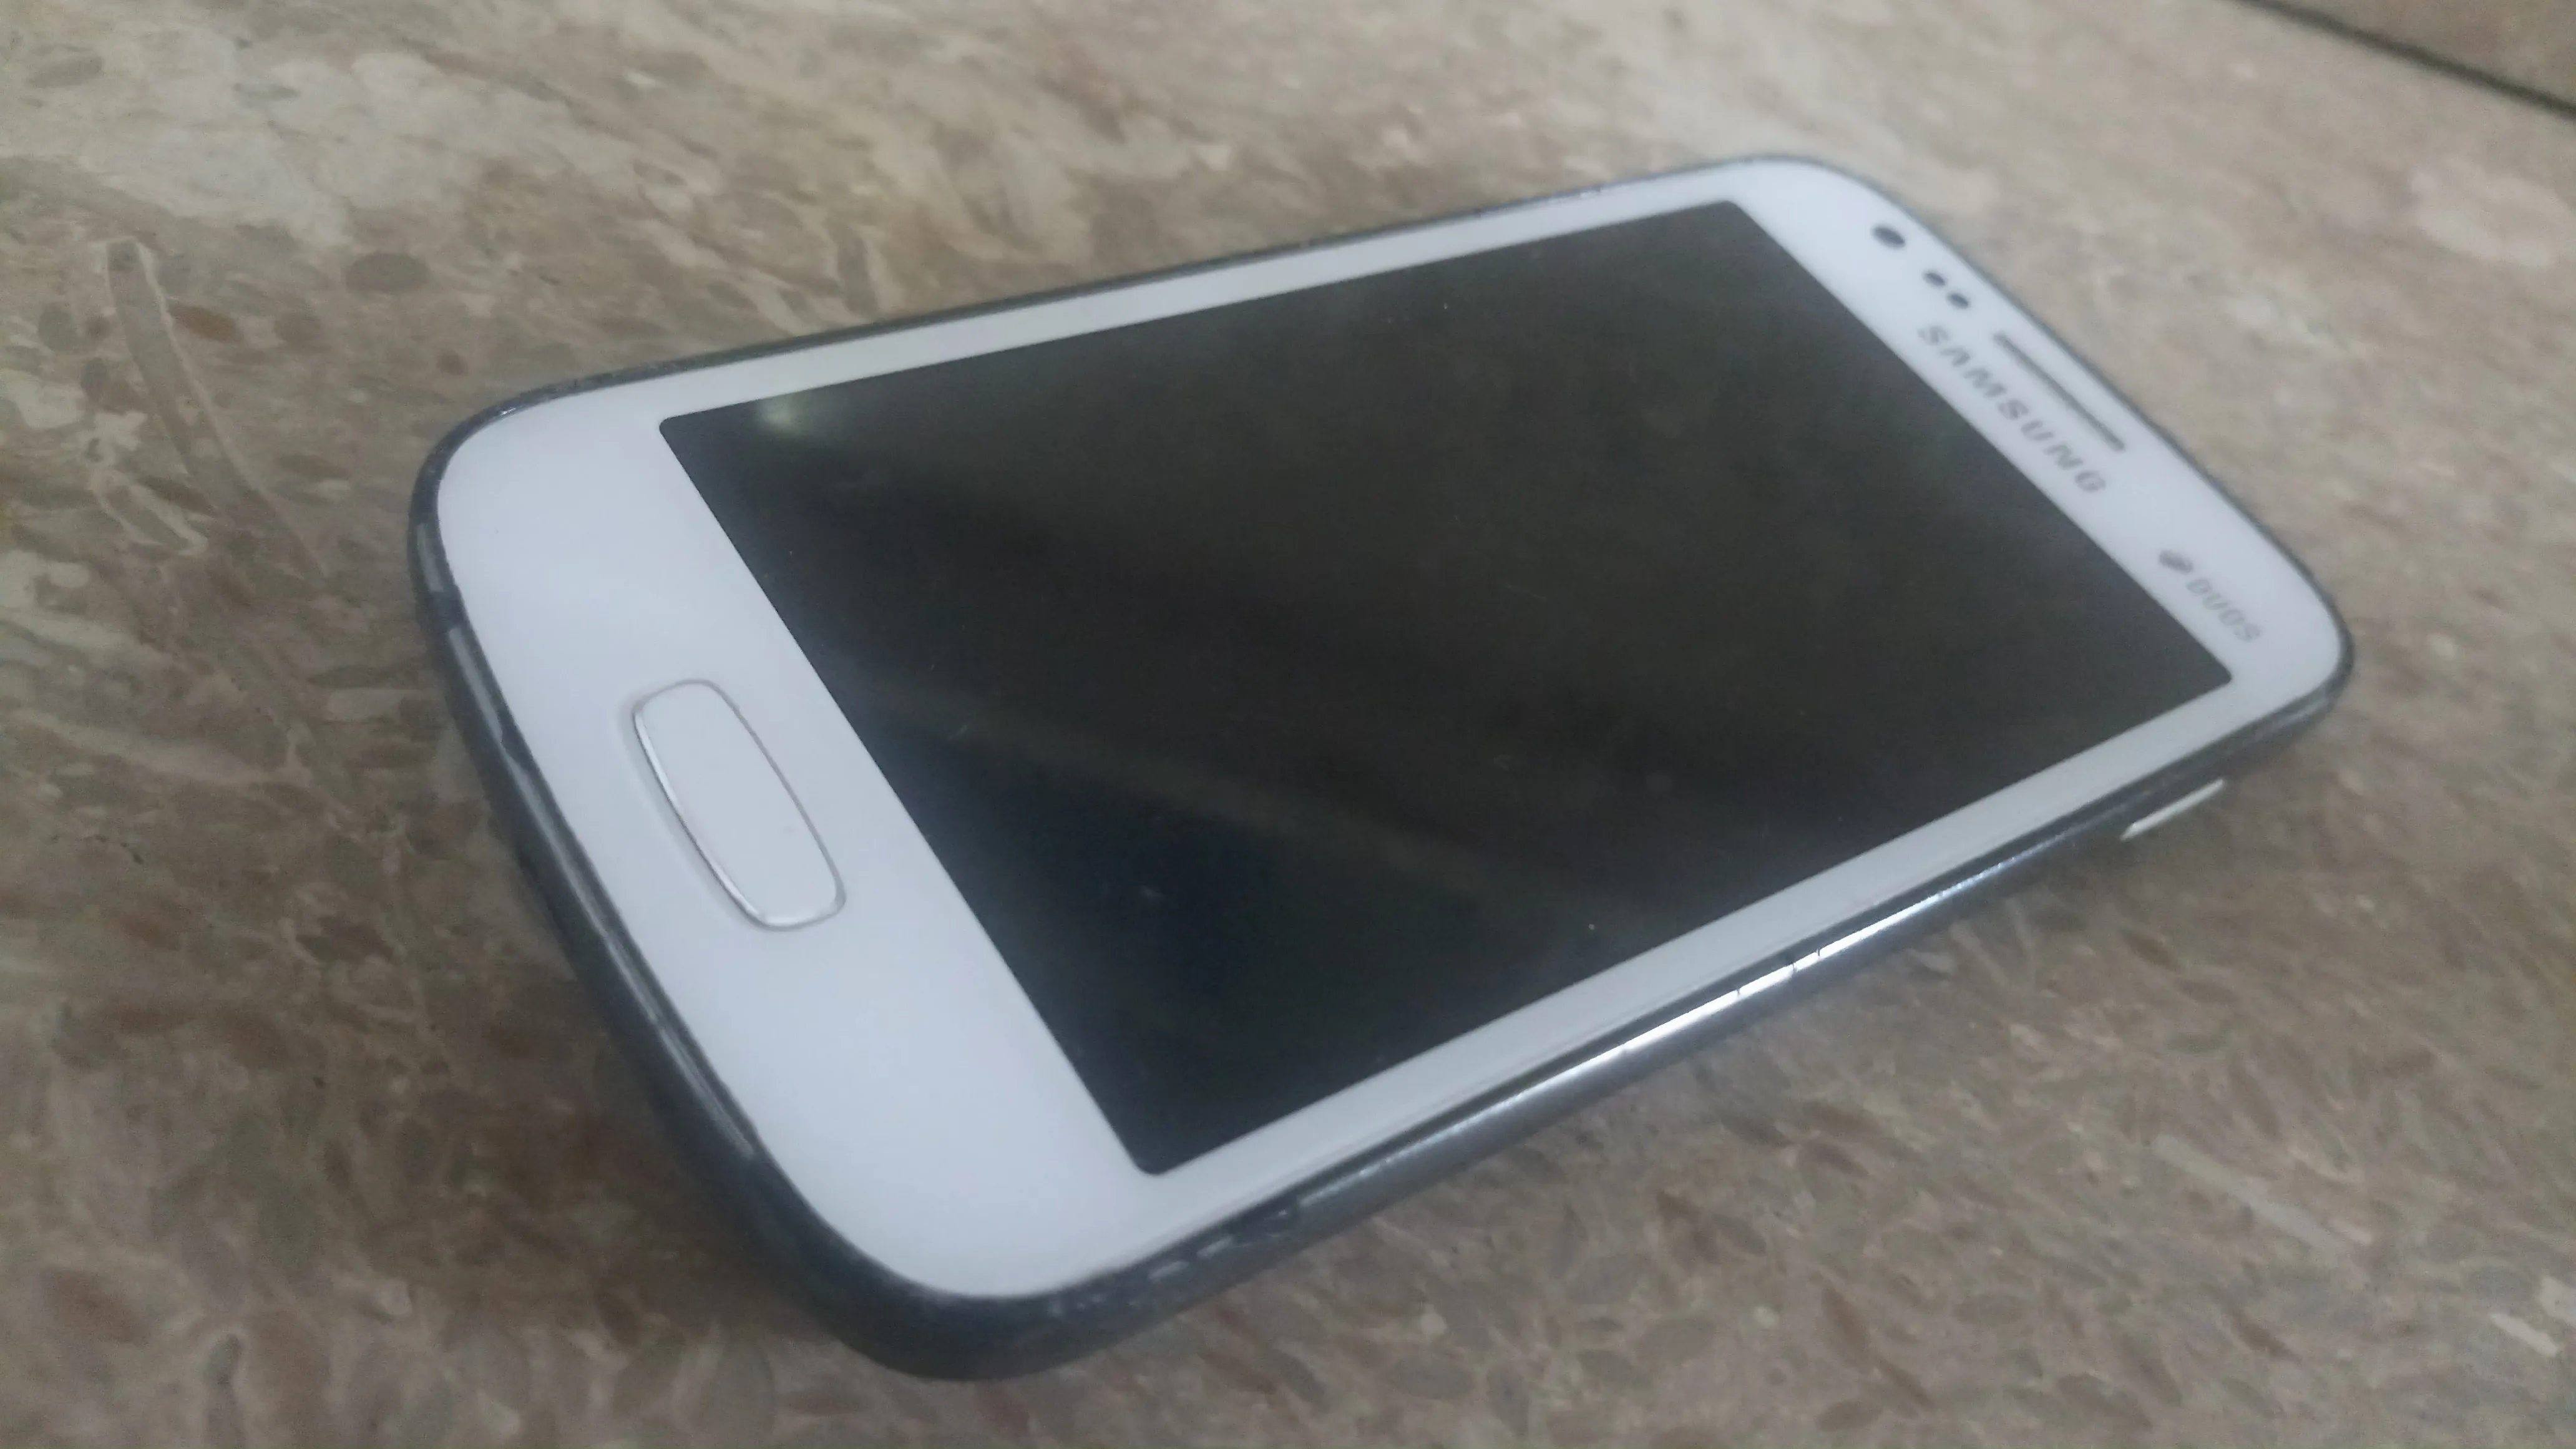 Samsung Galaxy ace 3 - photo 1